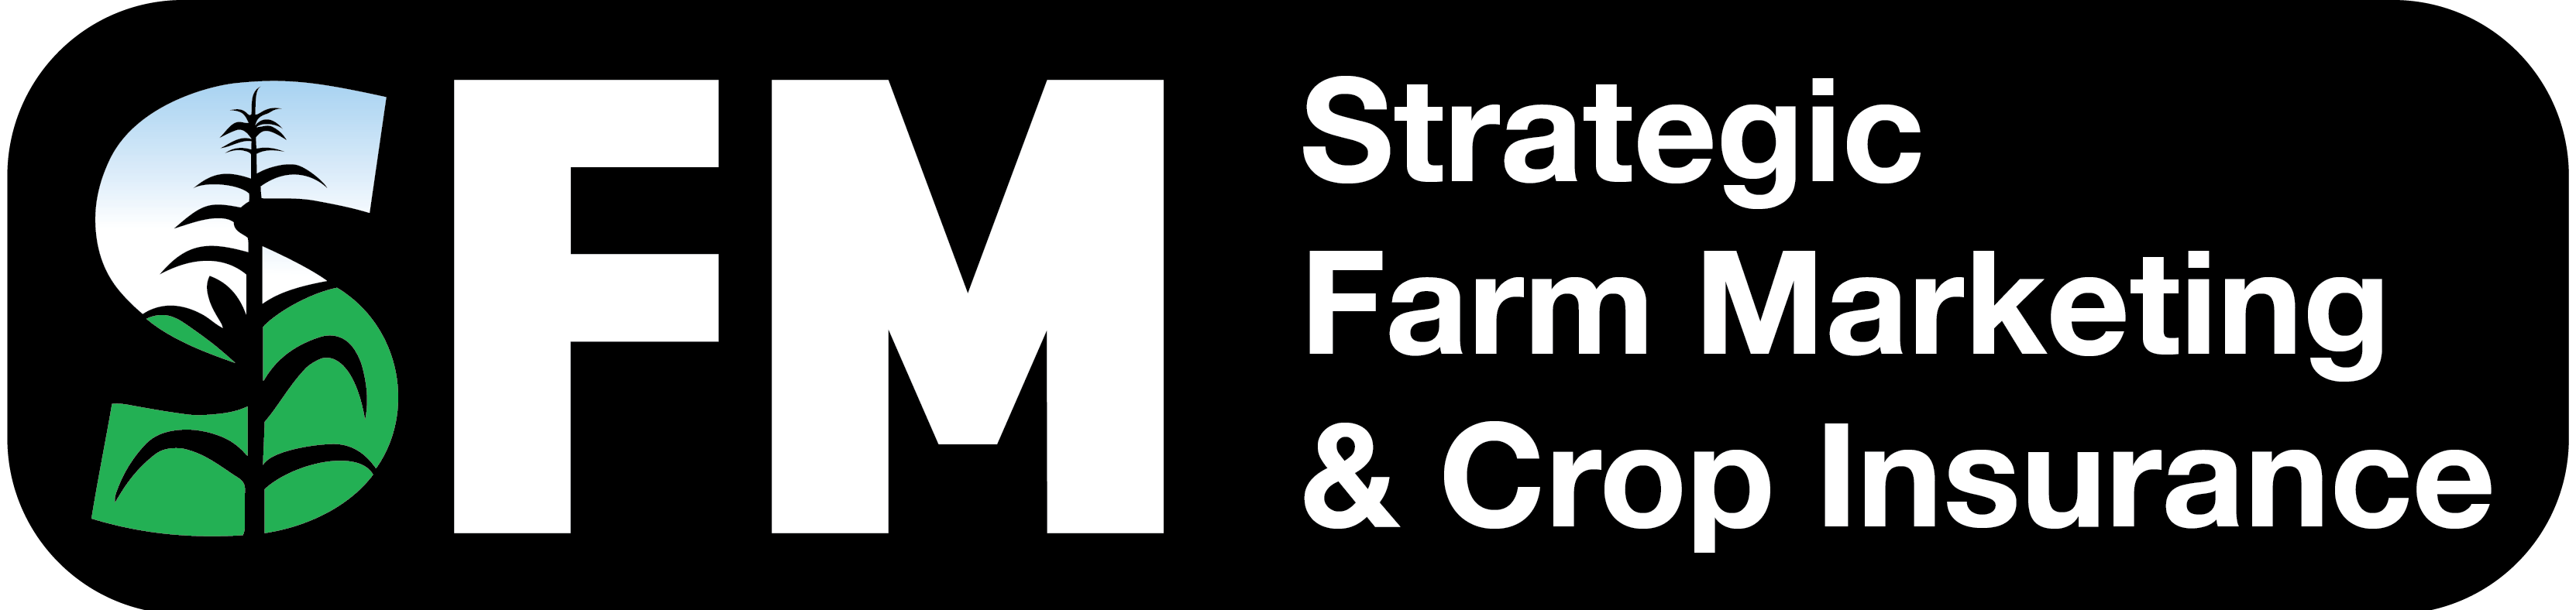 SFM logo white on black